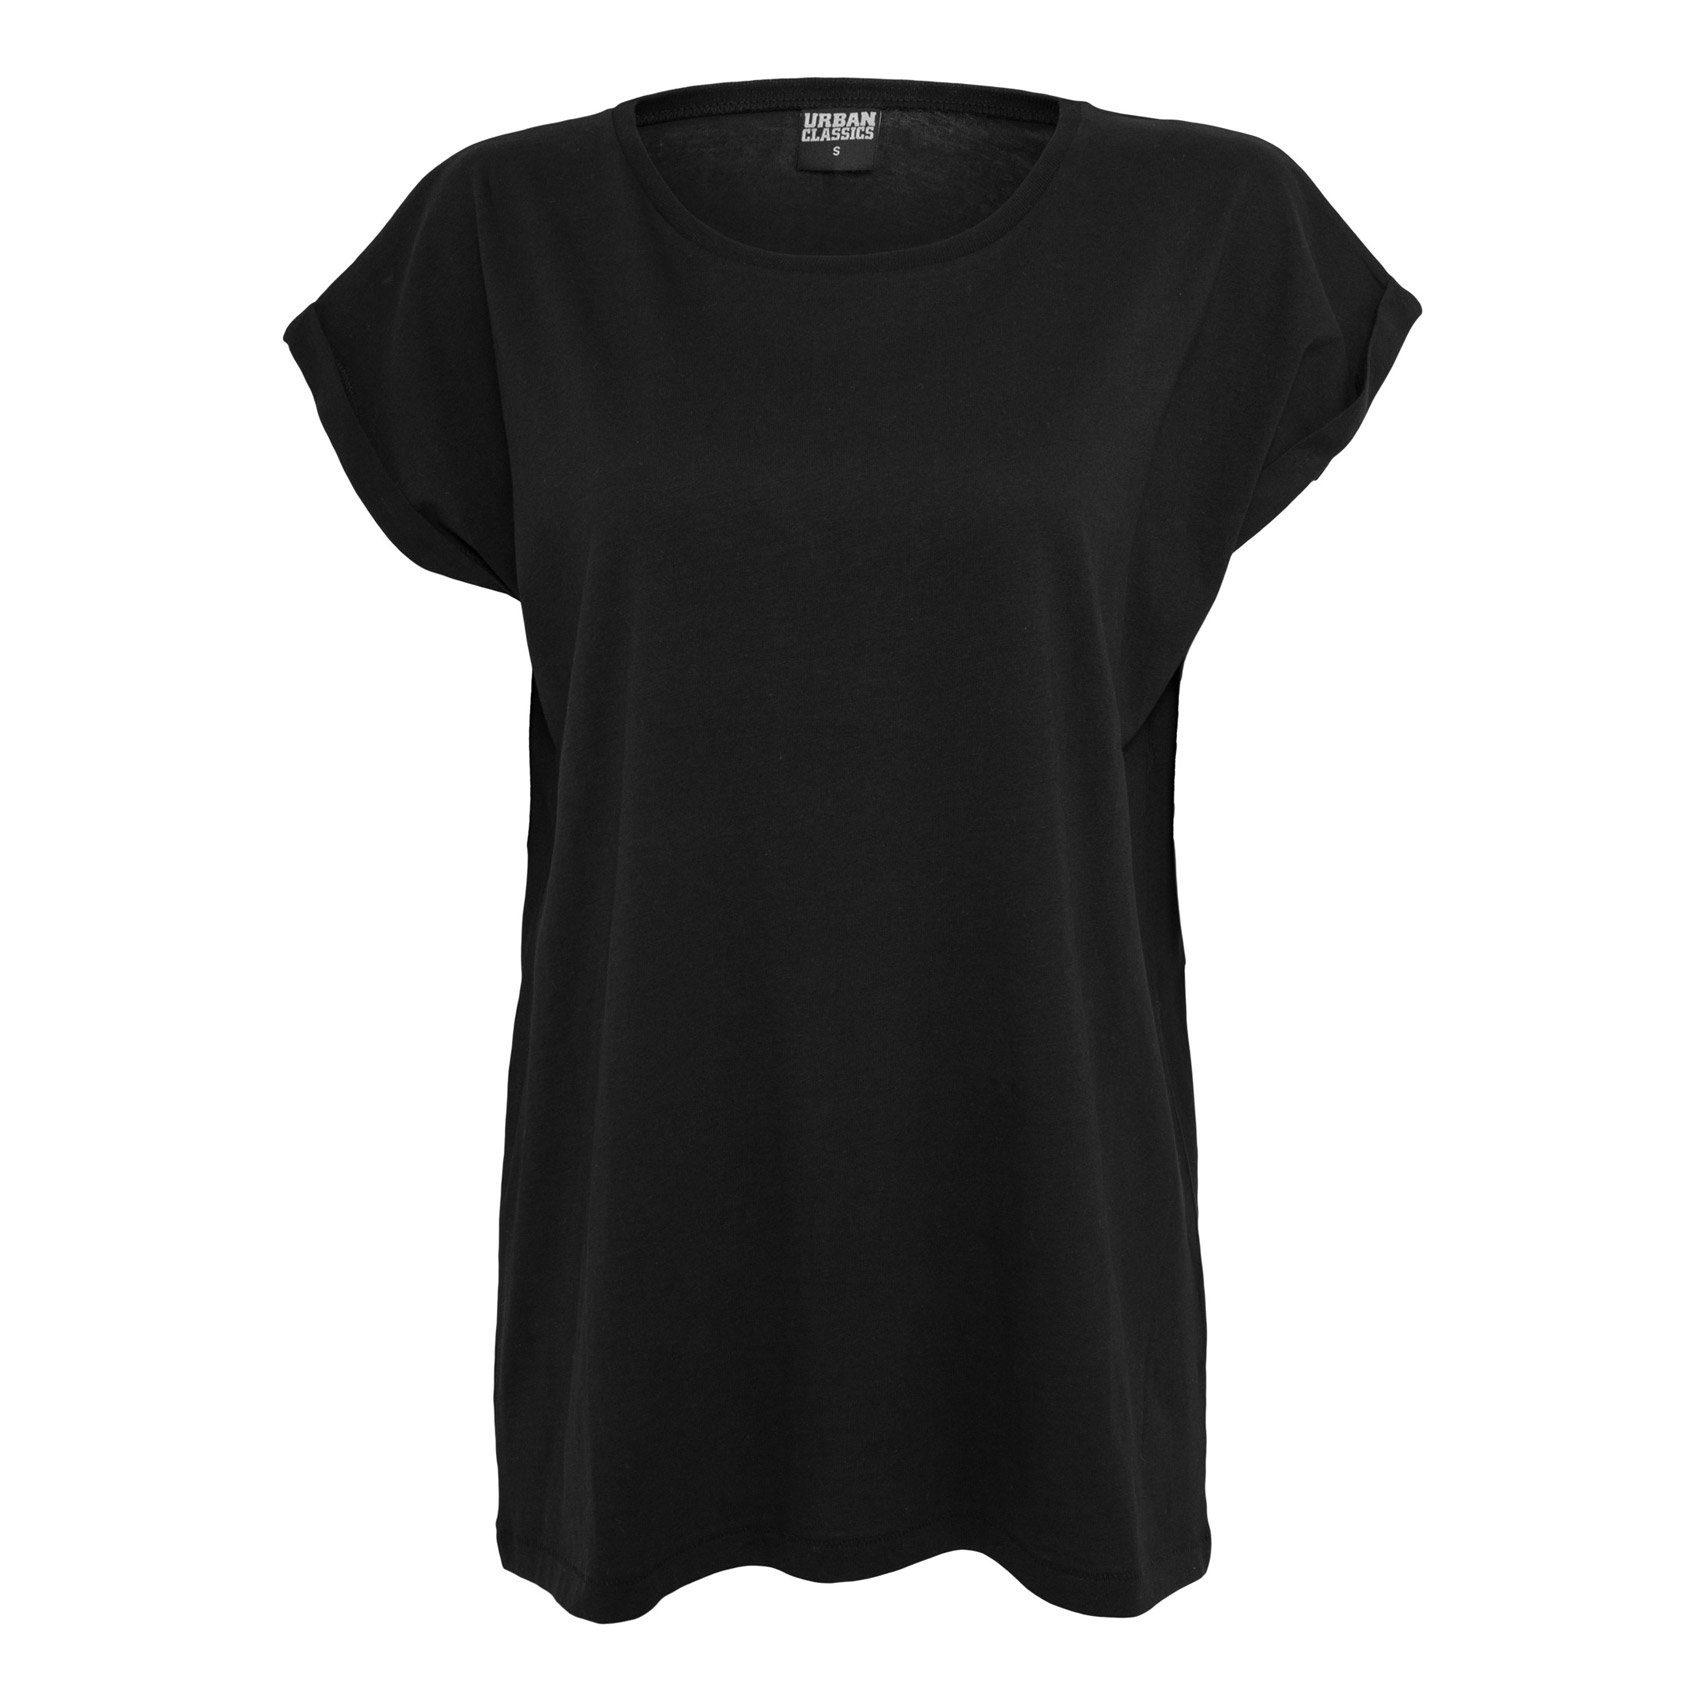 URBAN T-Shirt Ladies Shoulder black Extended black TB771 Extended - Shoulder CLASSICS Tee